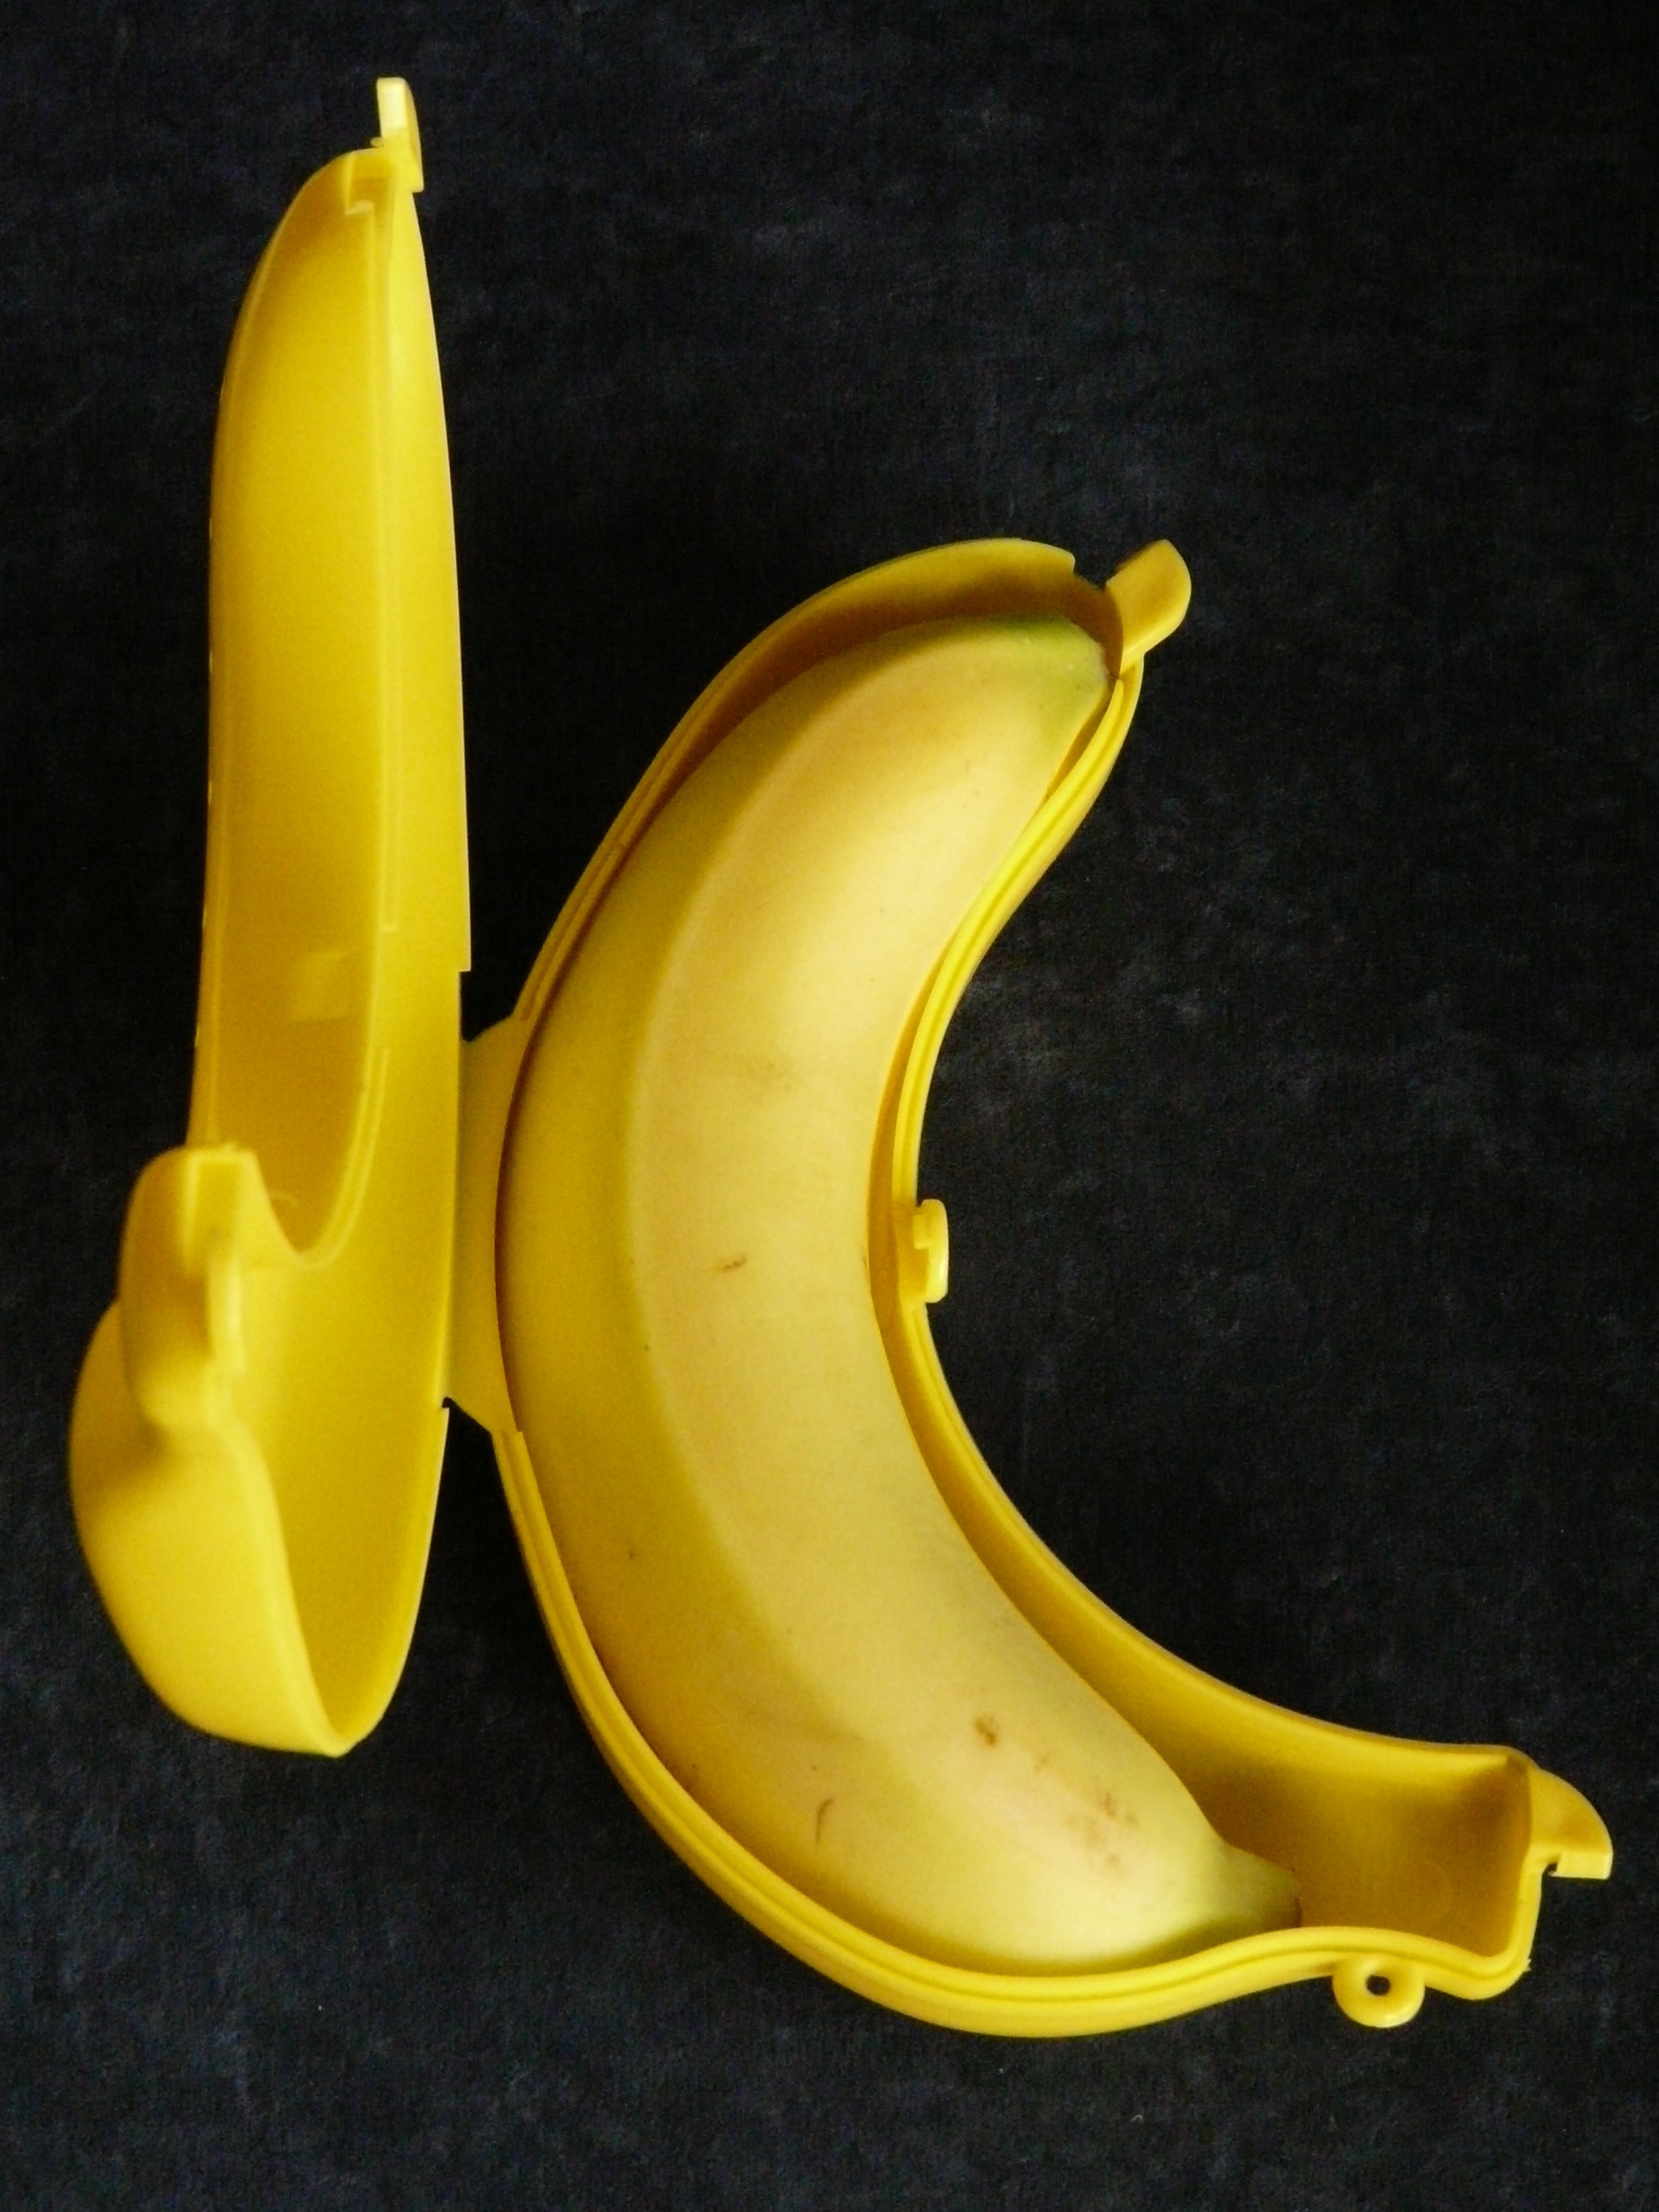 yellow banana fruit with case